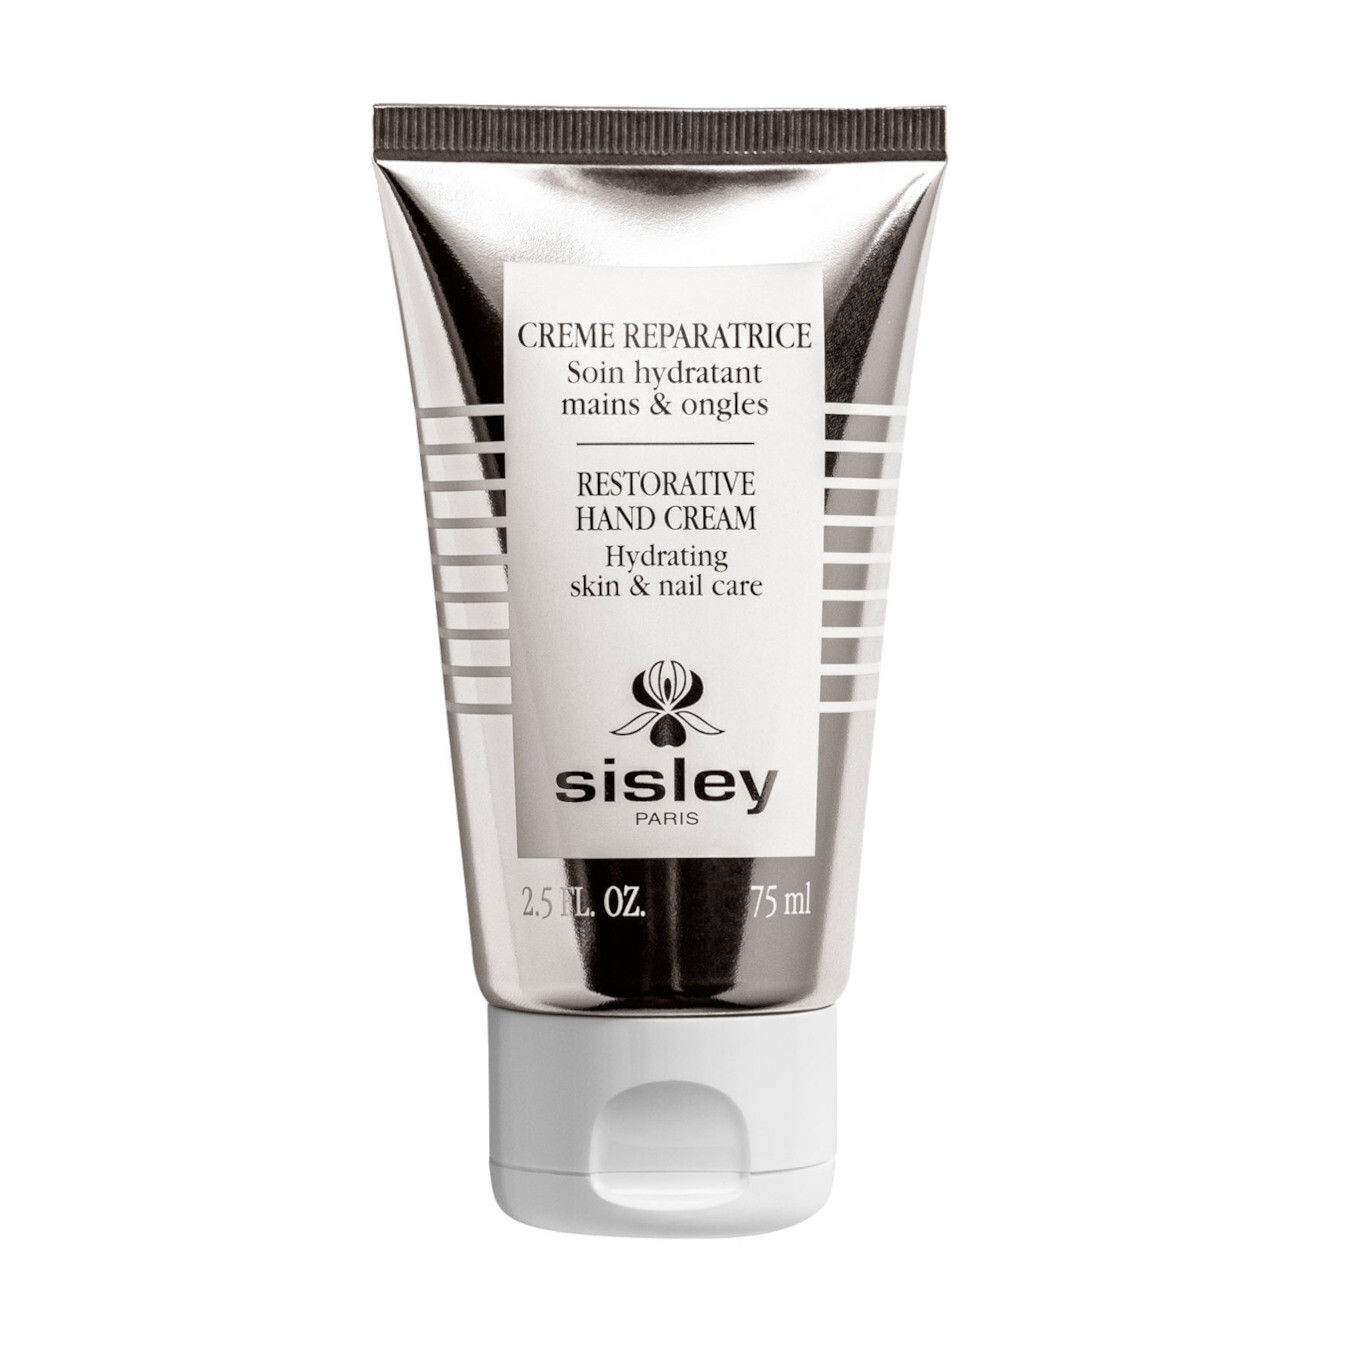 Sisley Crème Réparatrice Hydrating skin & nail care von Sisley